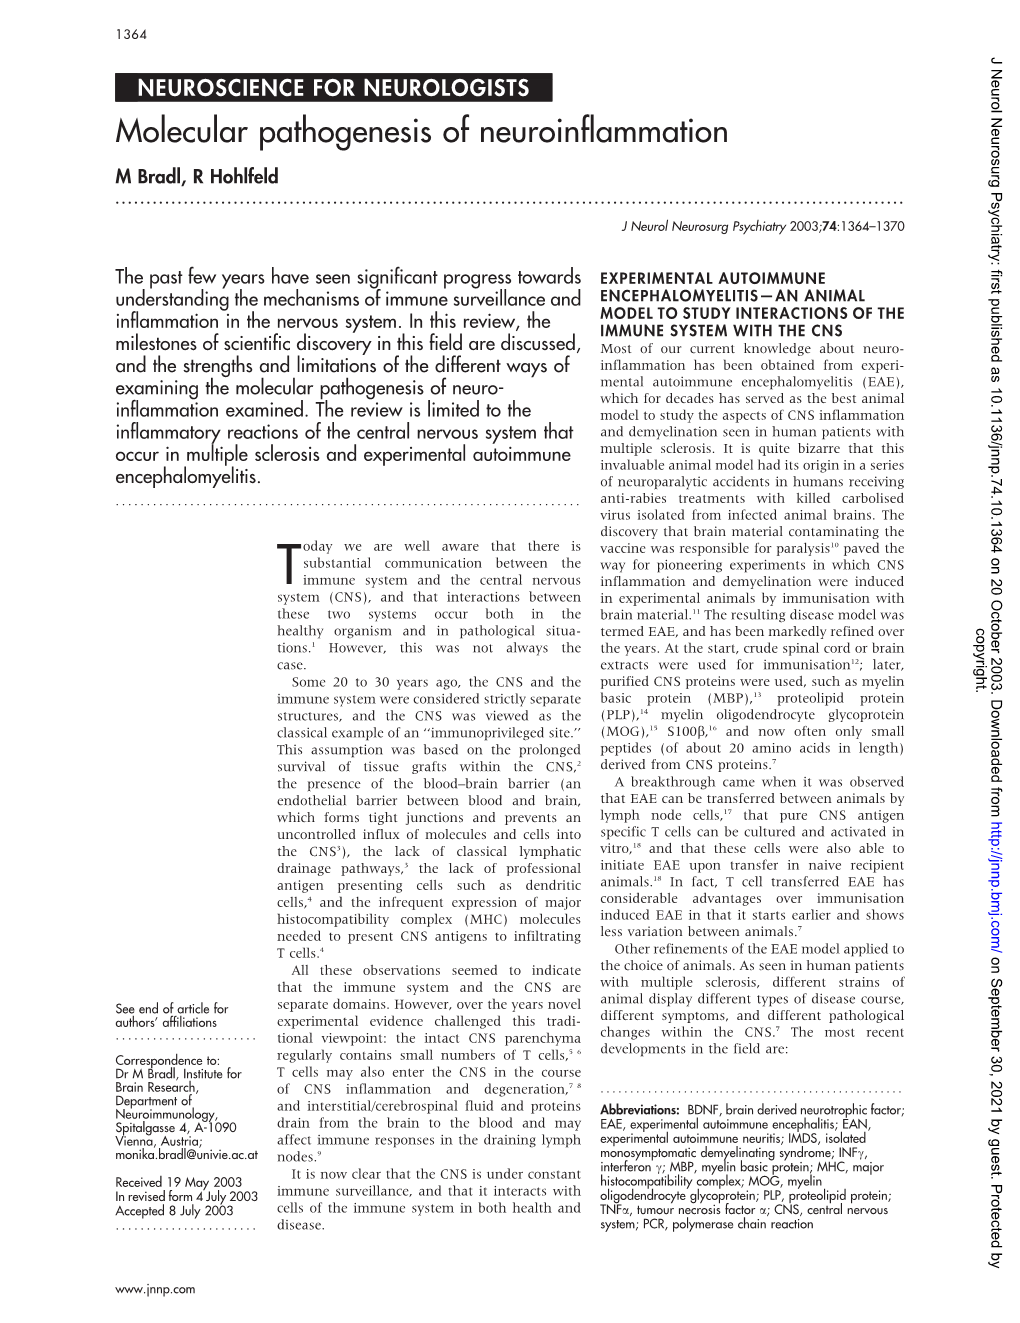 Molecular Pathogenesis of Neuroinflammation M Bradl, R Hohlfeld